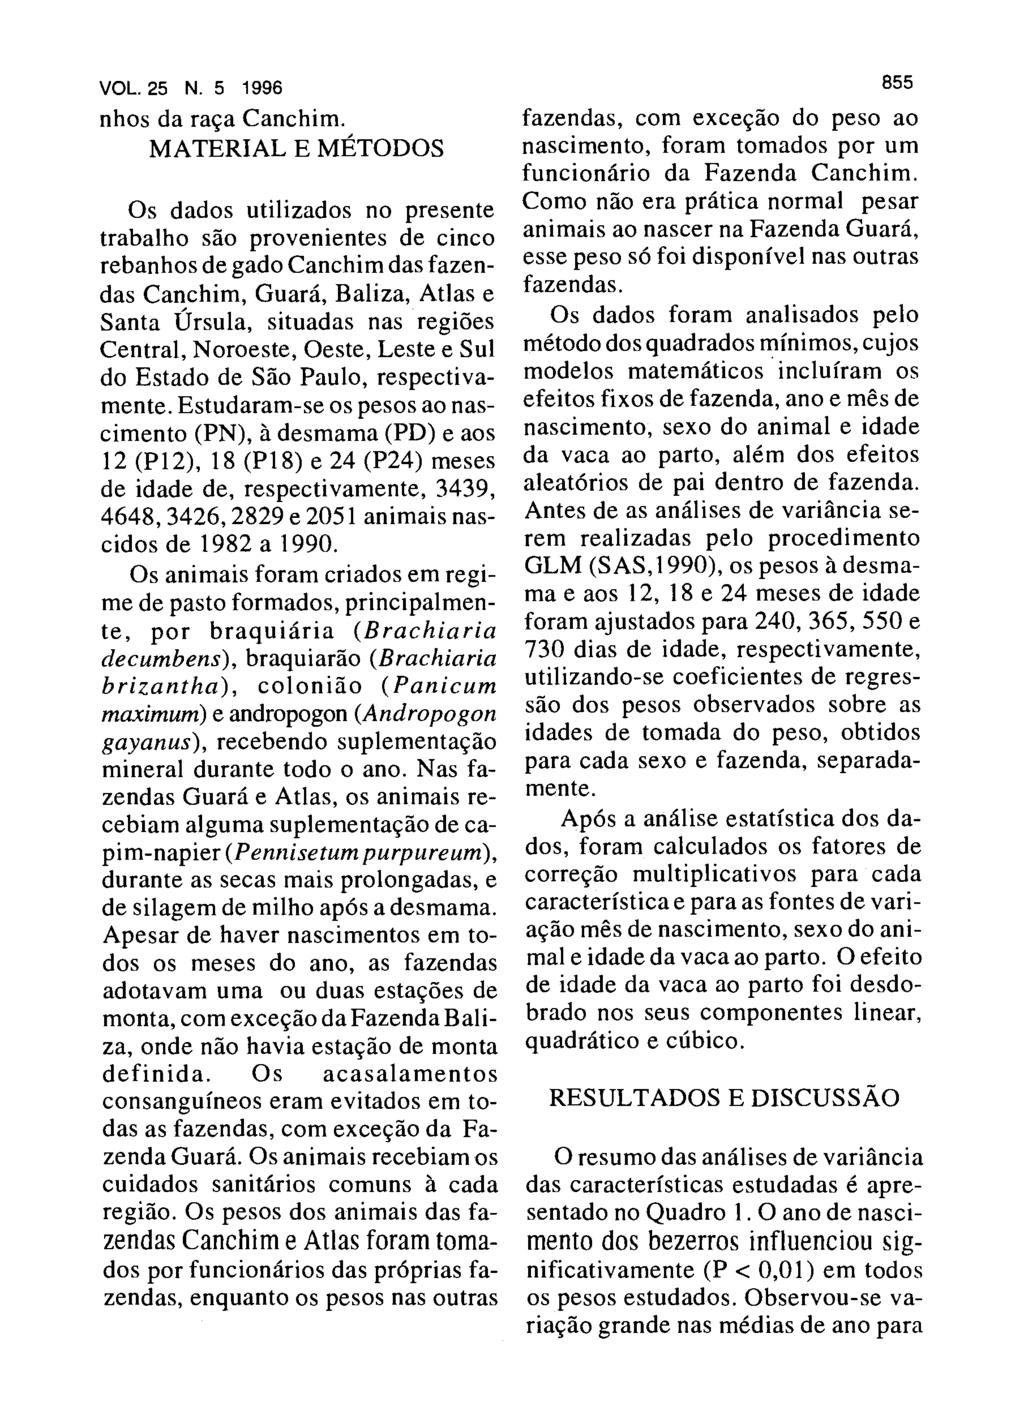 VOL. 25 N. 5 1996 nhos da raça Canchim.